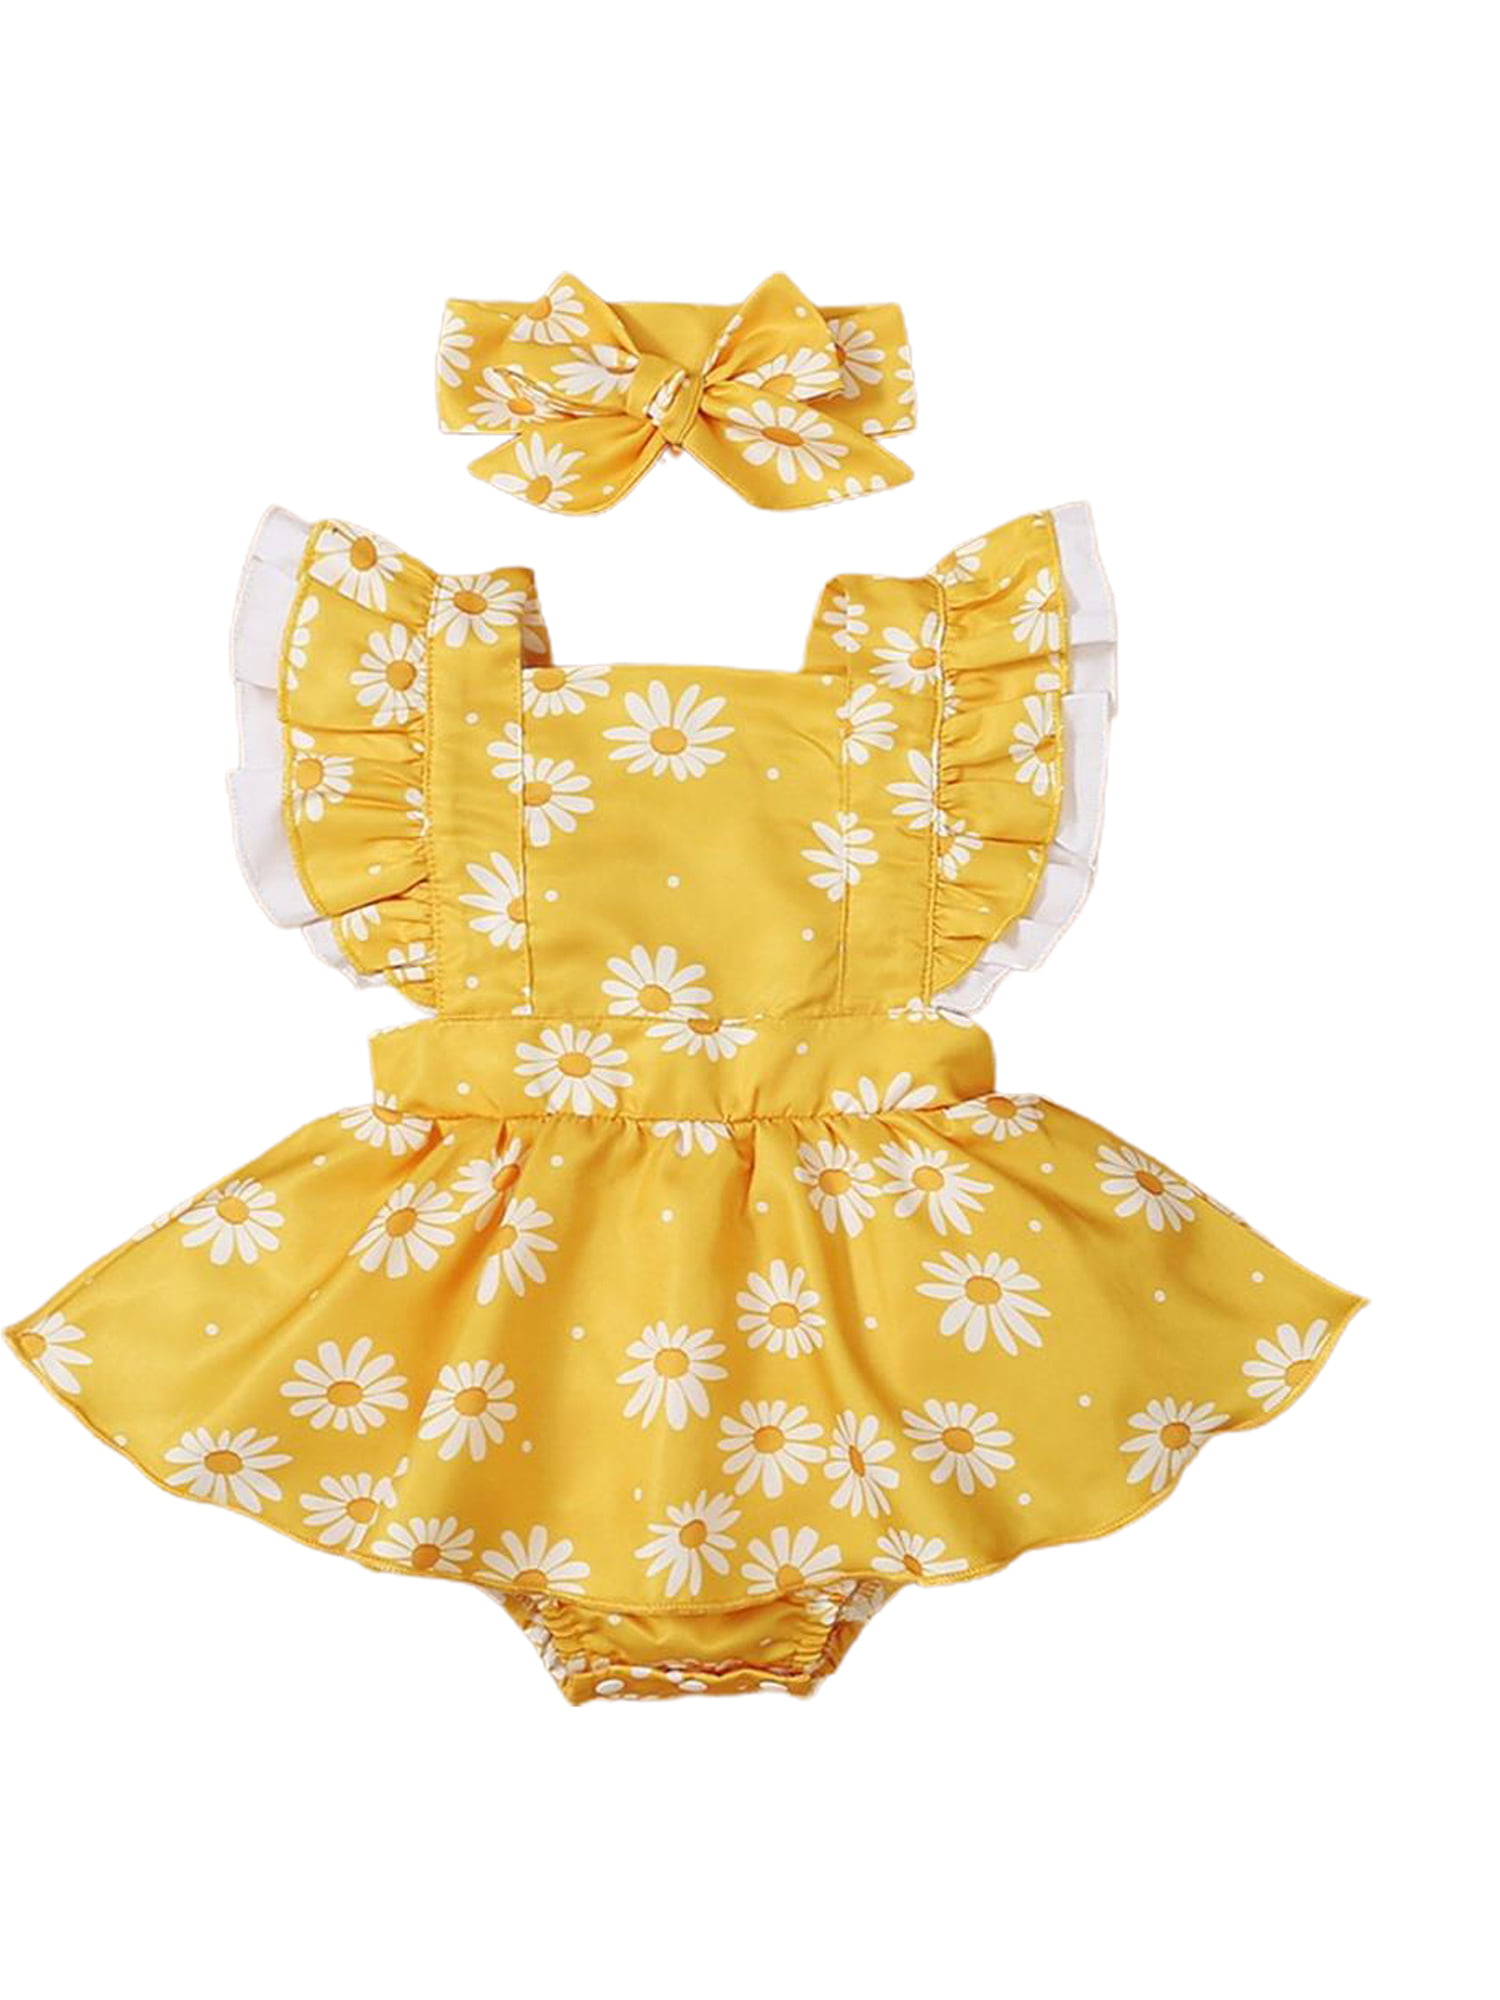 Sejardin Kids Baby Girl Ruffle Dress Short Sleeve Cloud Print Patchwork Princess Dress Summer Casual Outfits